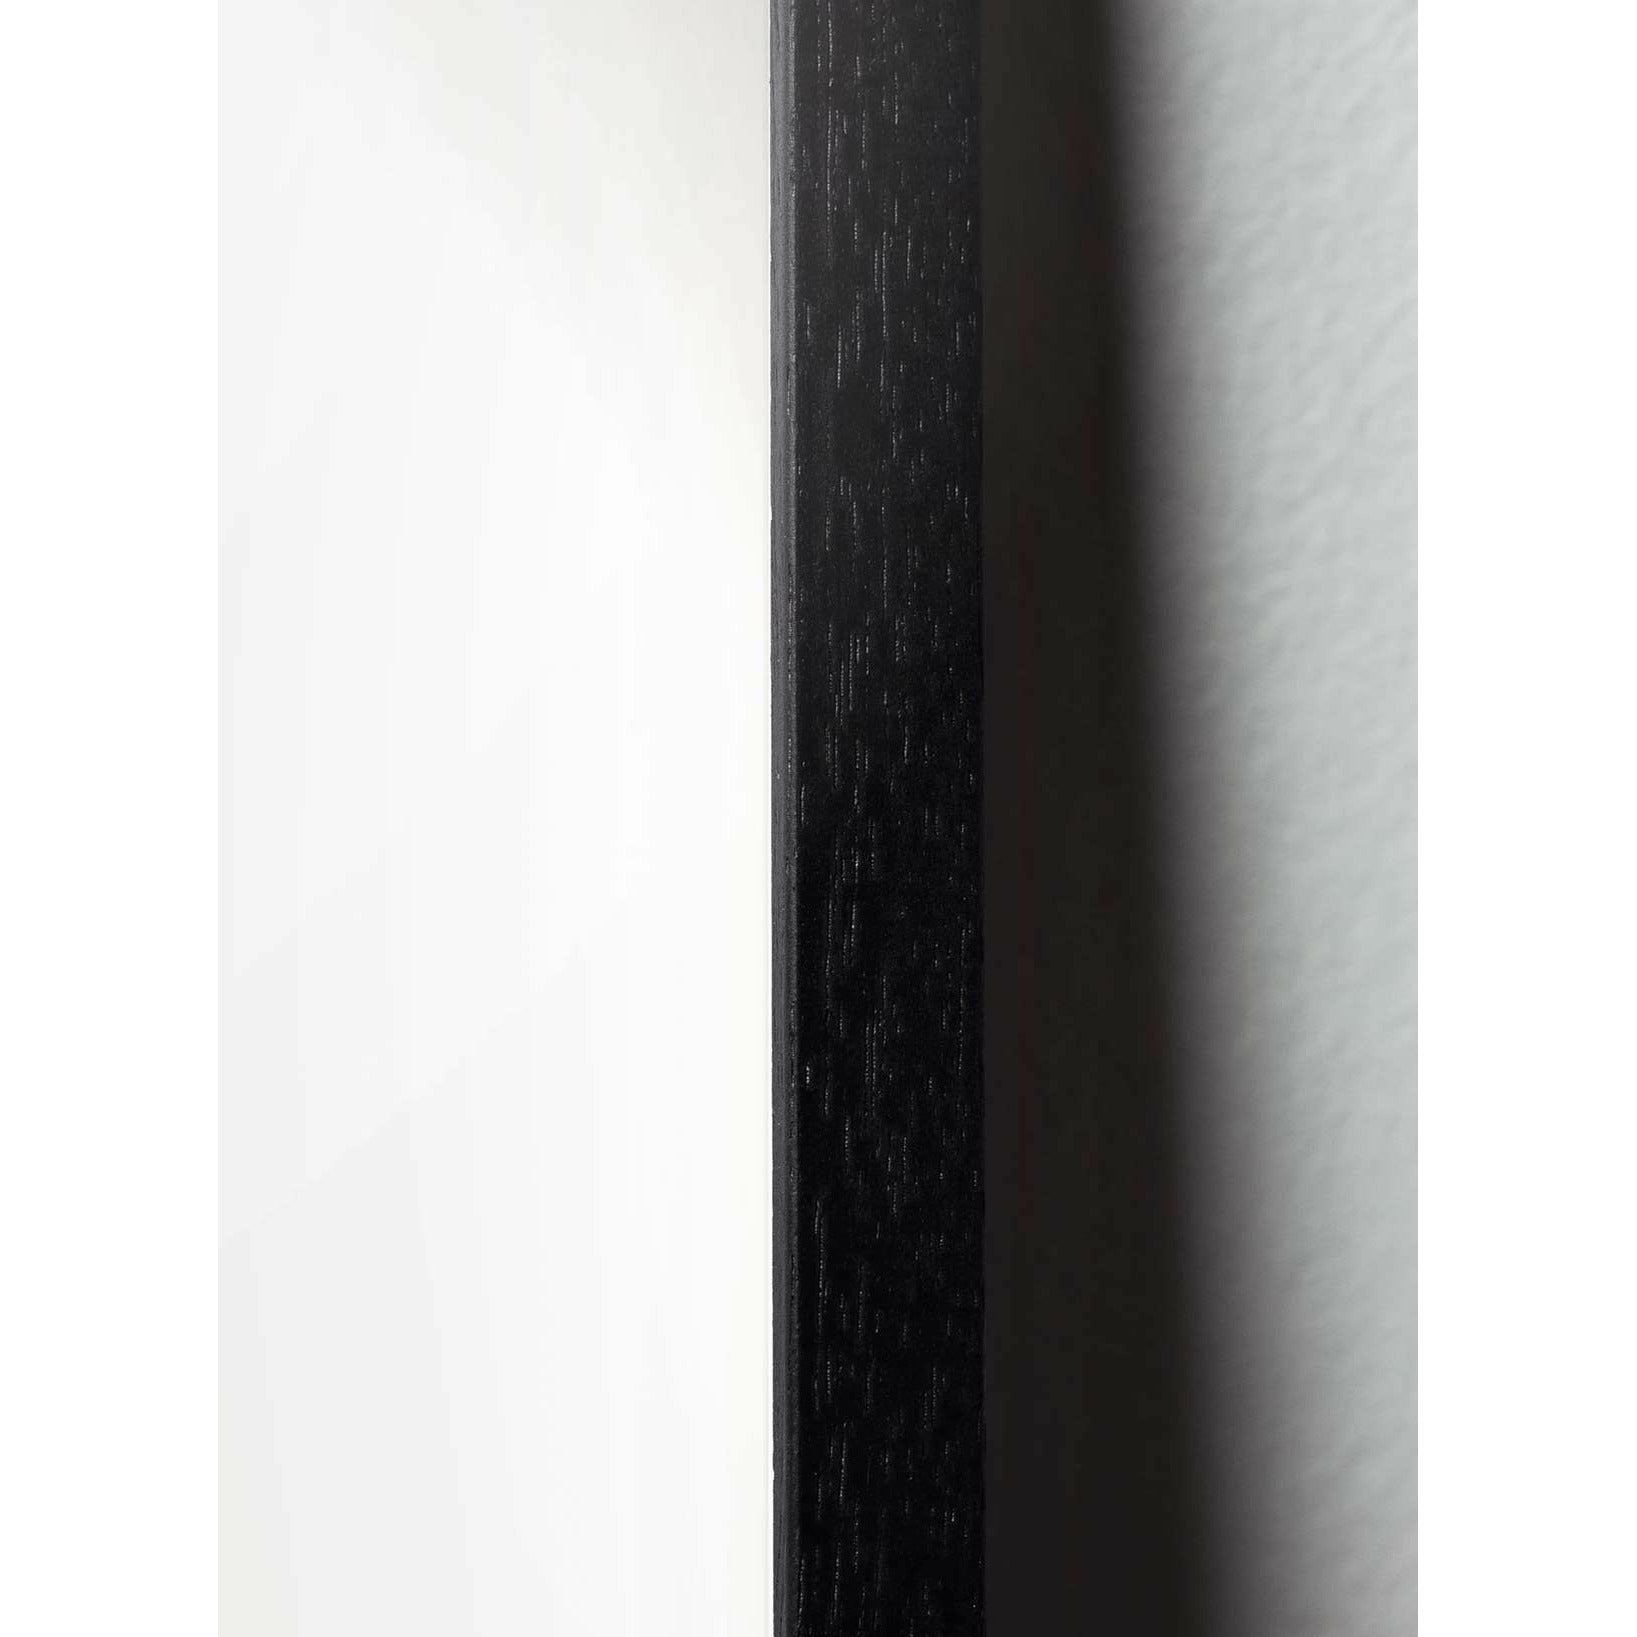 Brainchild Pelikan Classic Poster, Frame In Black Lacquered Wood 50x70 Cm, Dark Blue Background